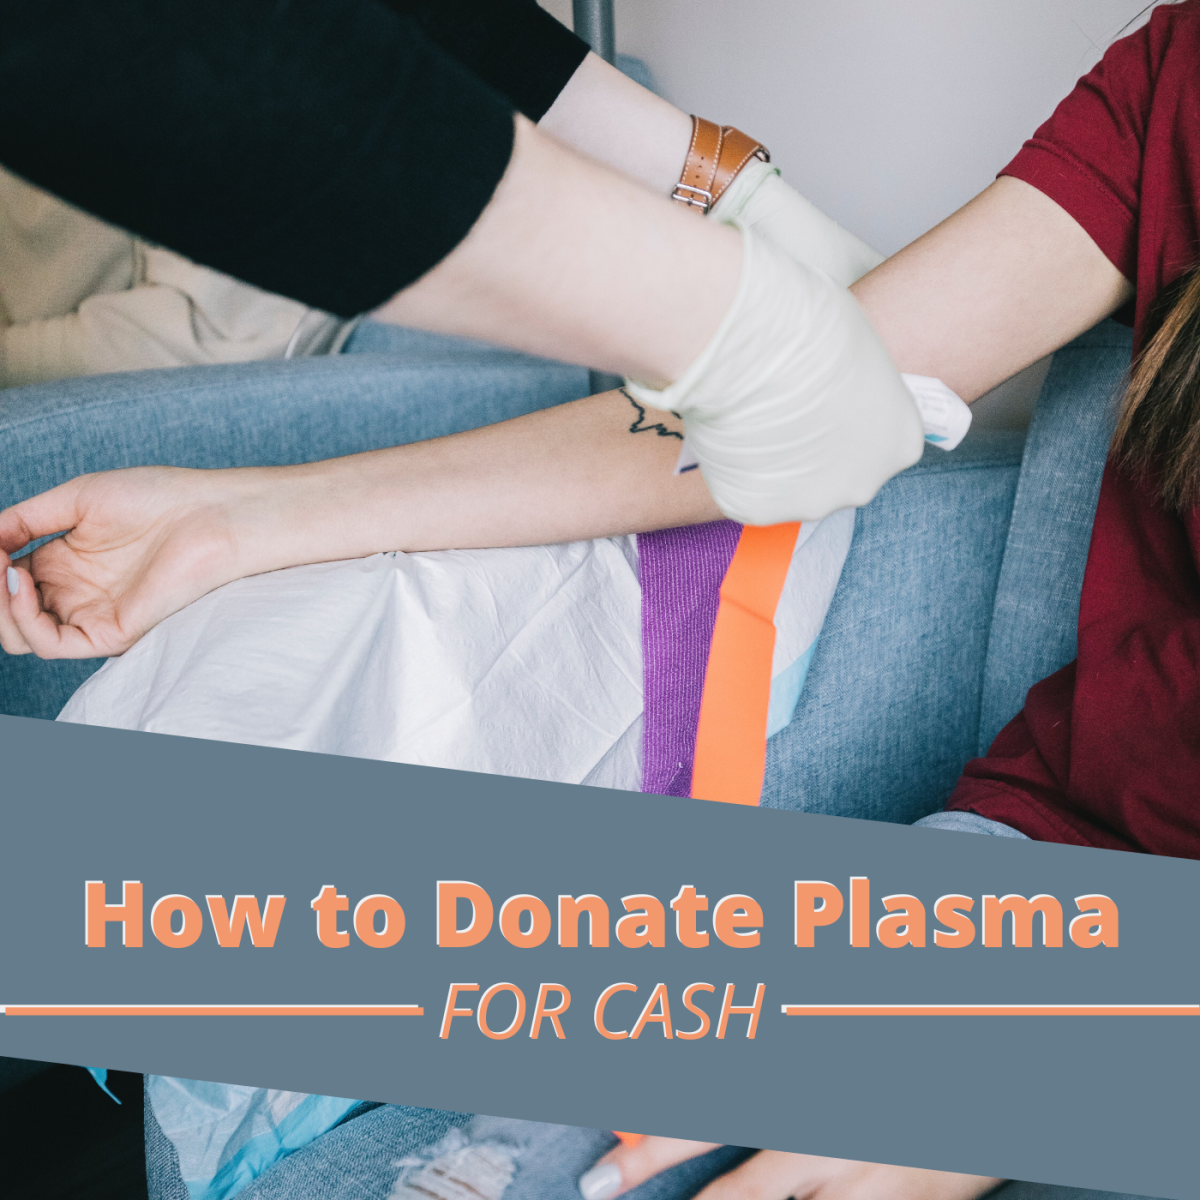 How to Donate Plasma for Money